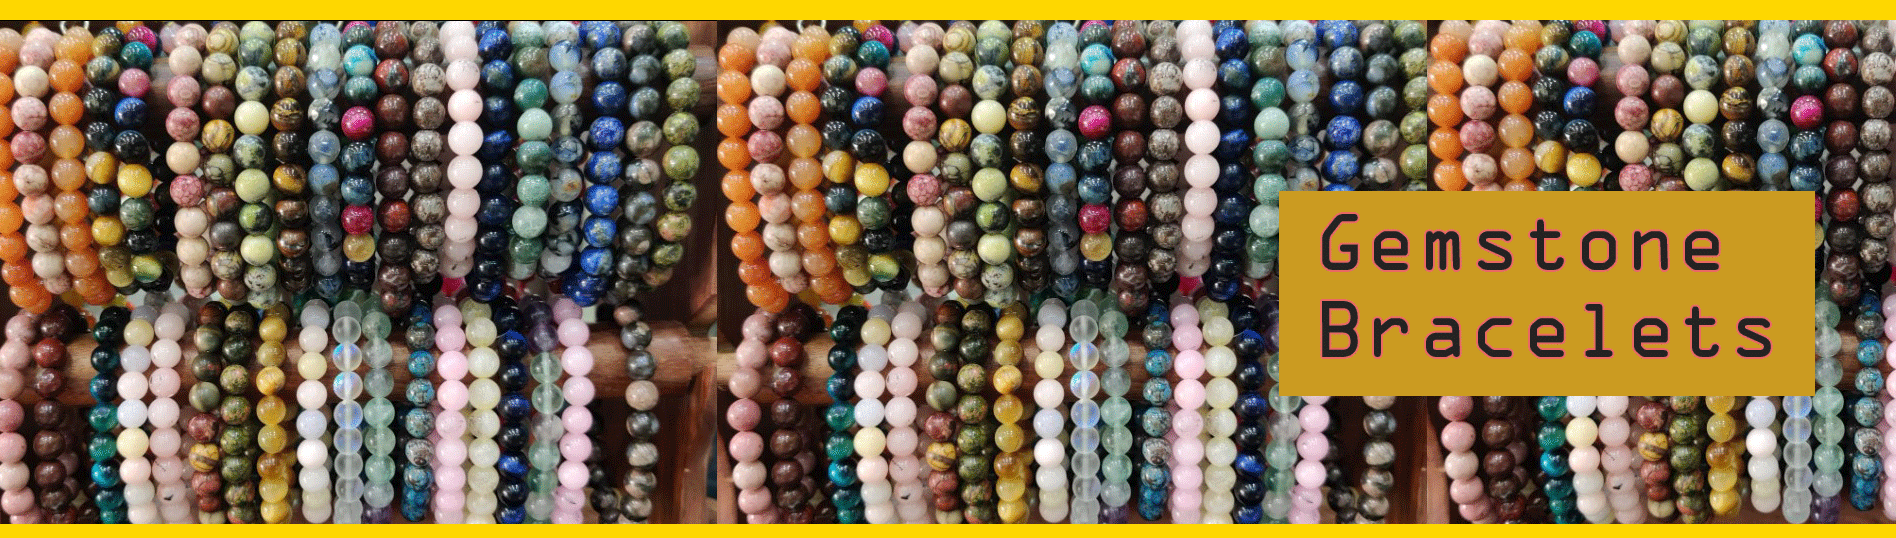 Plastic Beads at Rs 20/packet, Peelamedu, Coimbatore